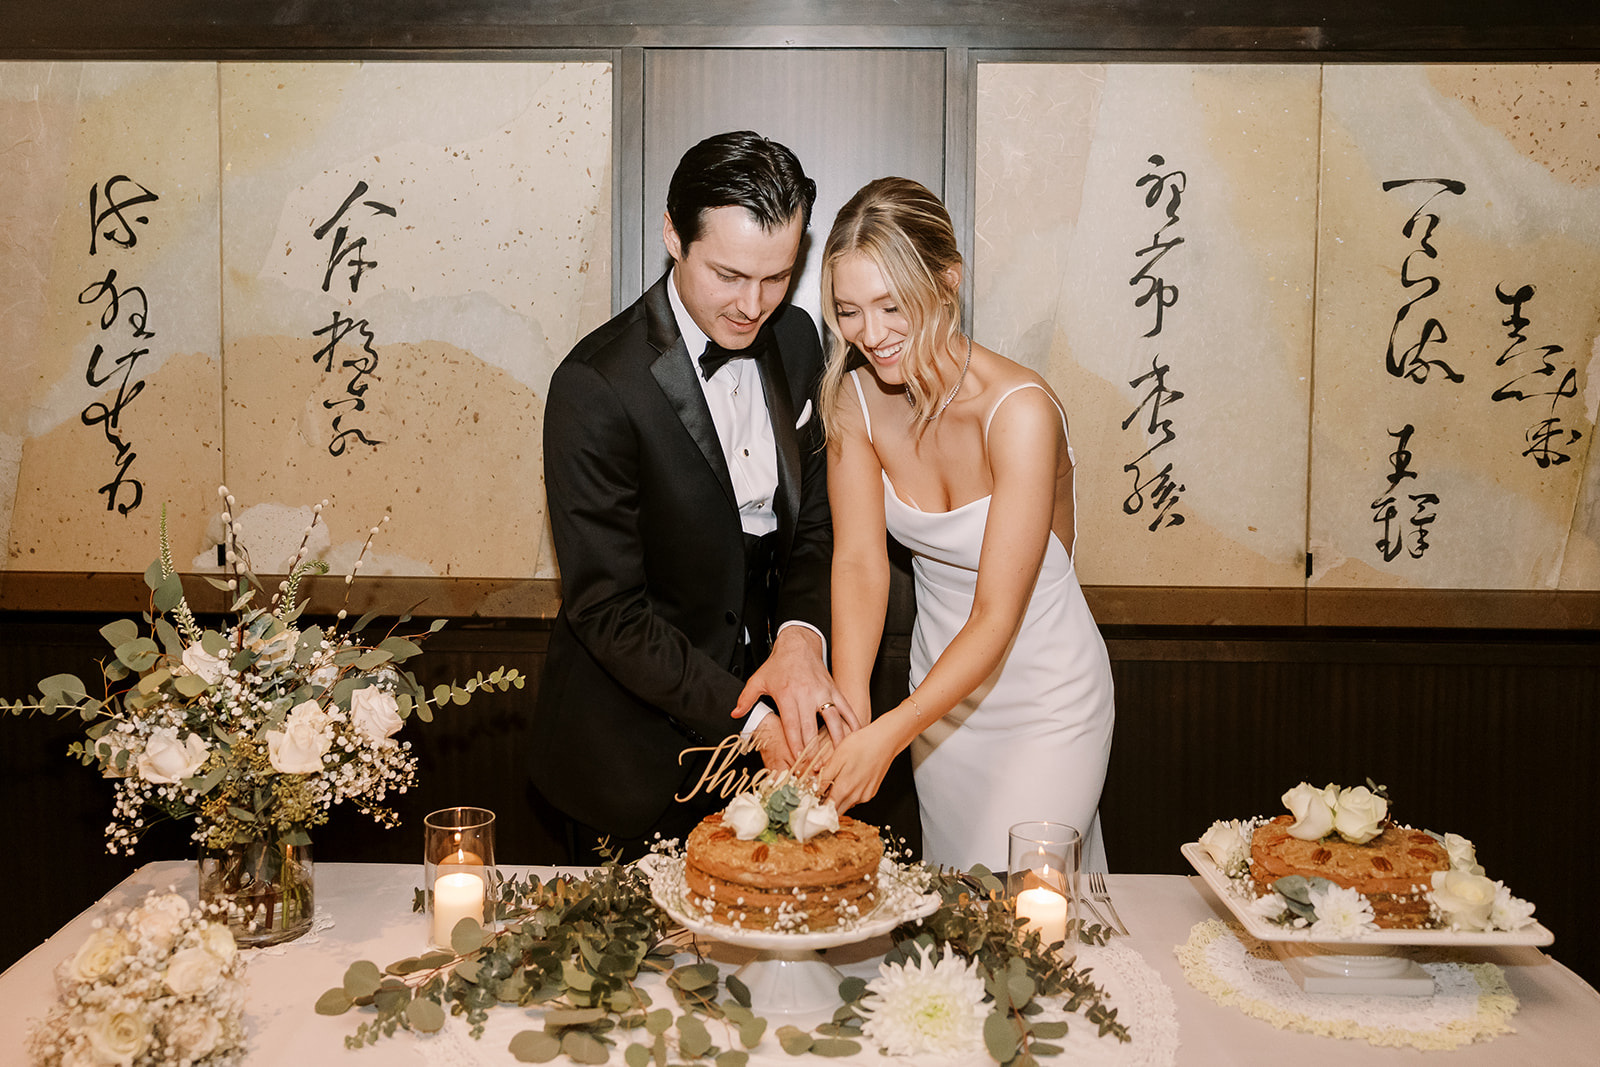 bride and groom cut cake at James Bond vibe wedding